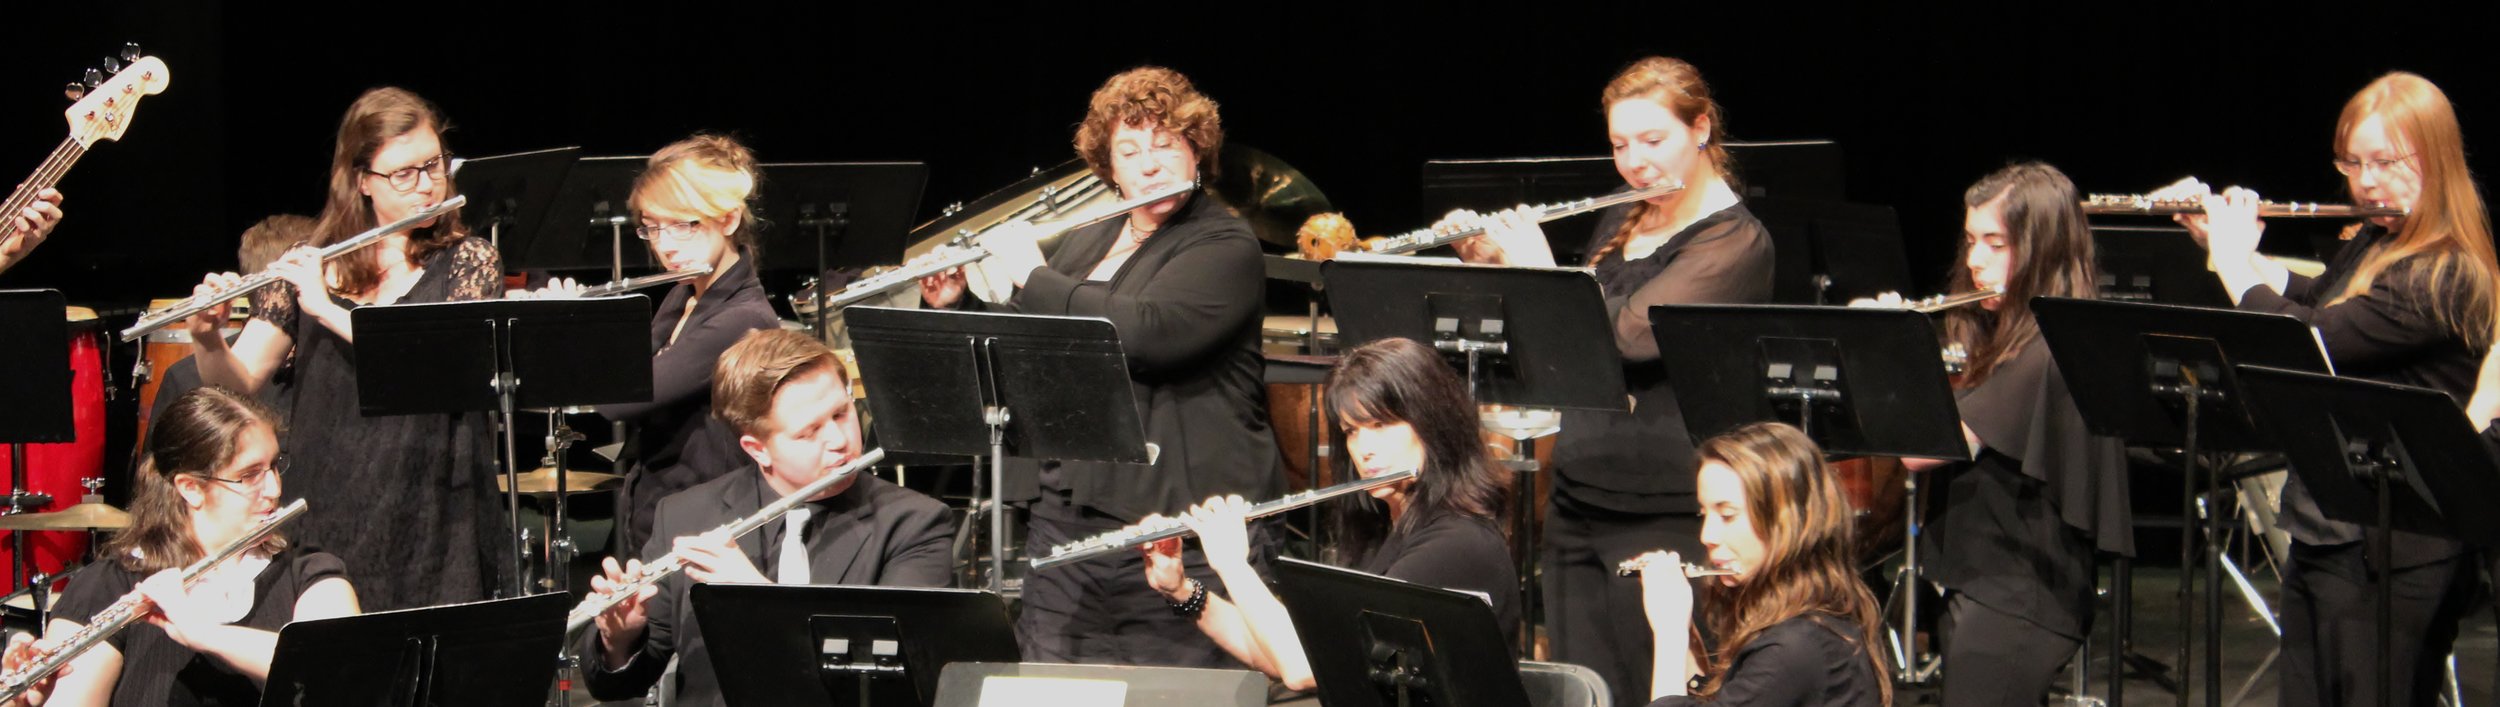 SPU Flute Ensemble 2013